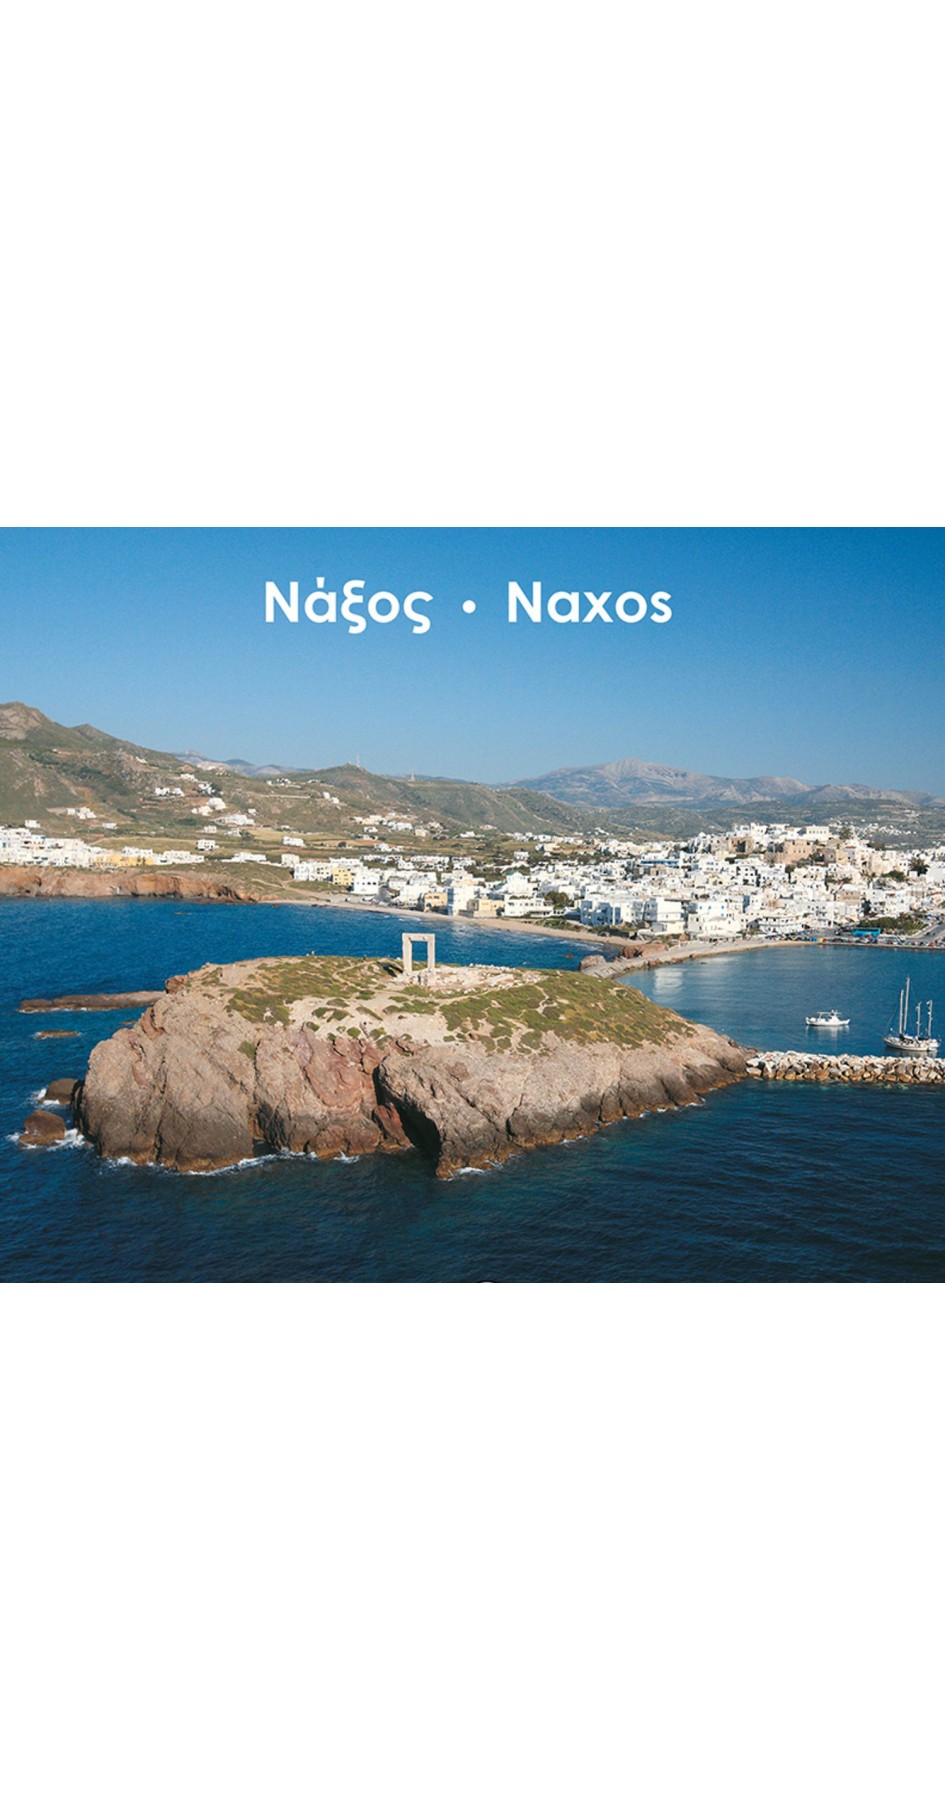 Naxos: as the seagull flies